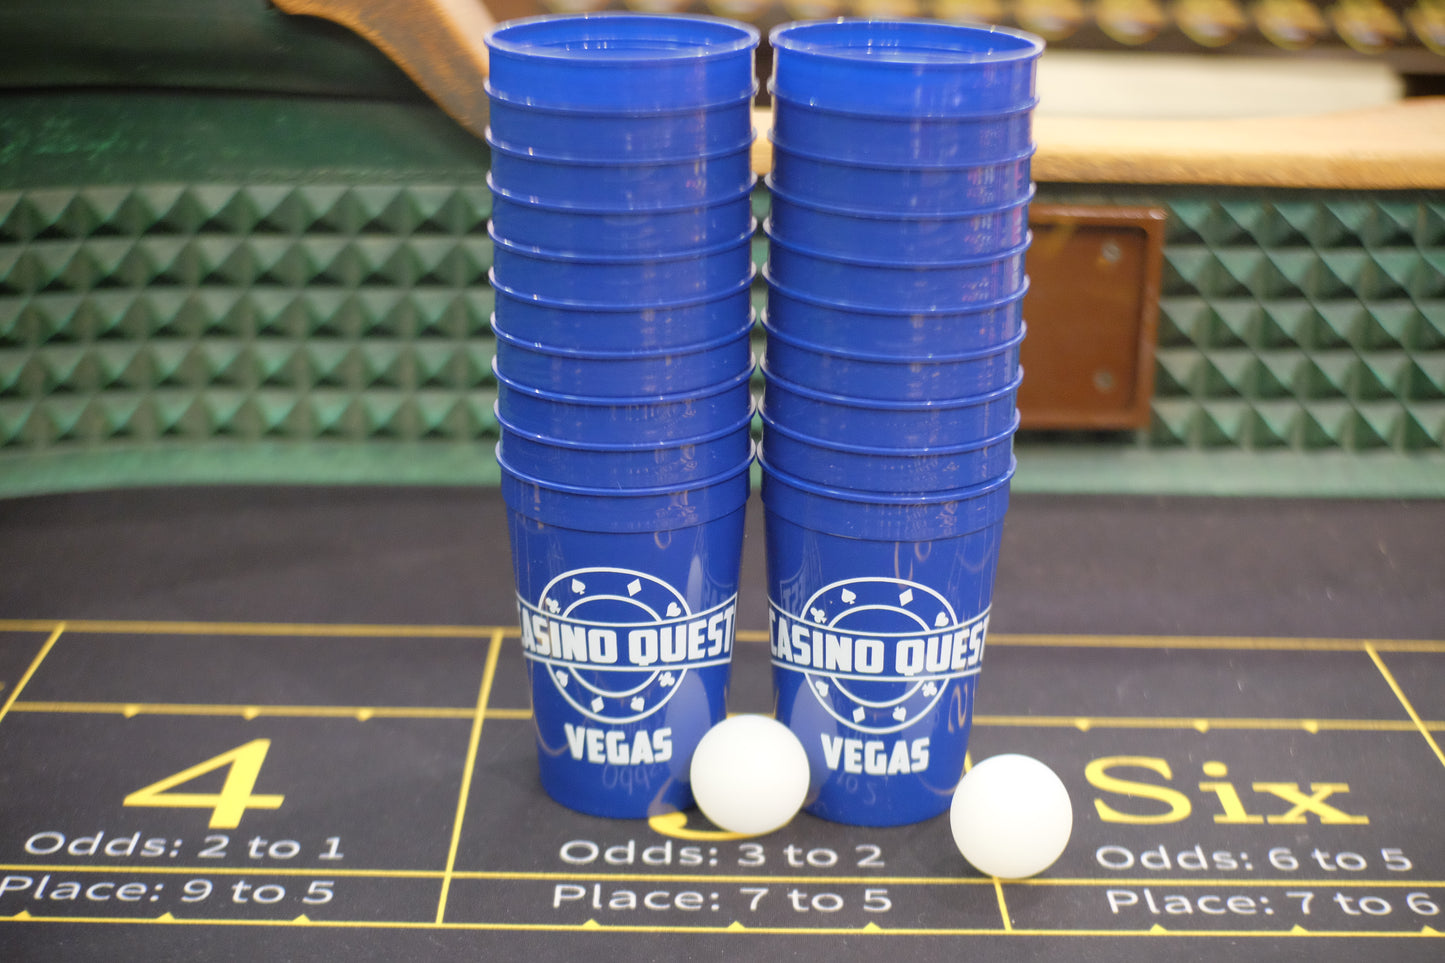 Casino Quest Official Beer Pong Set